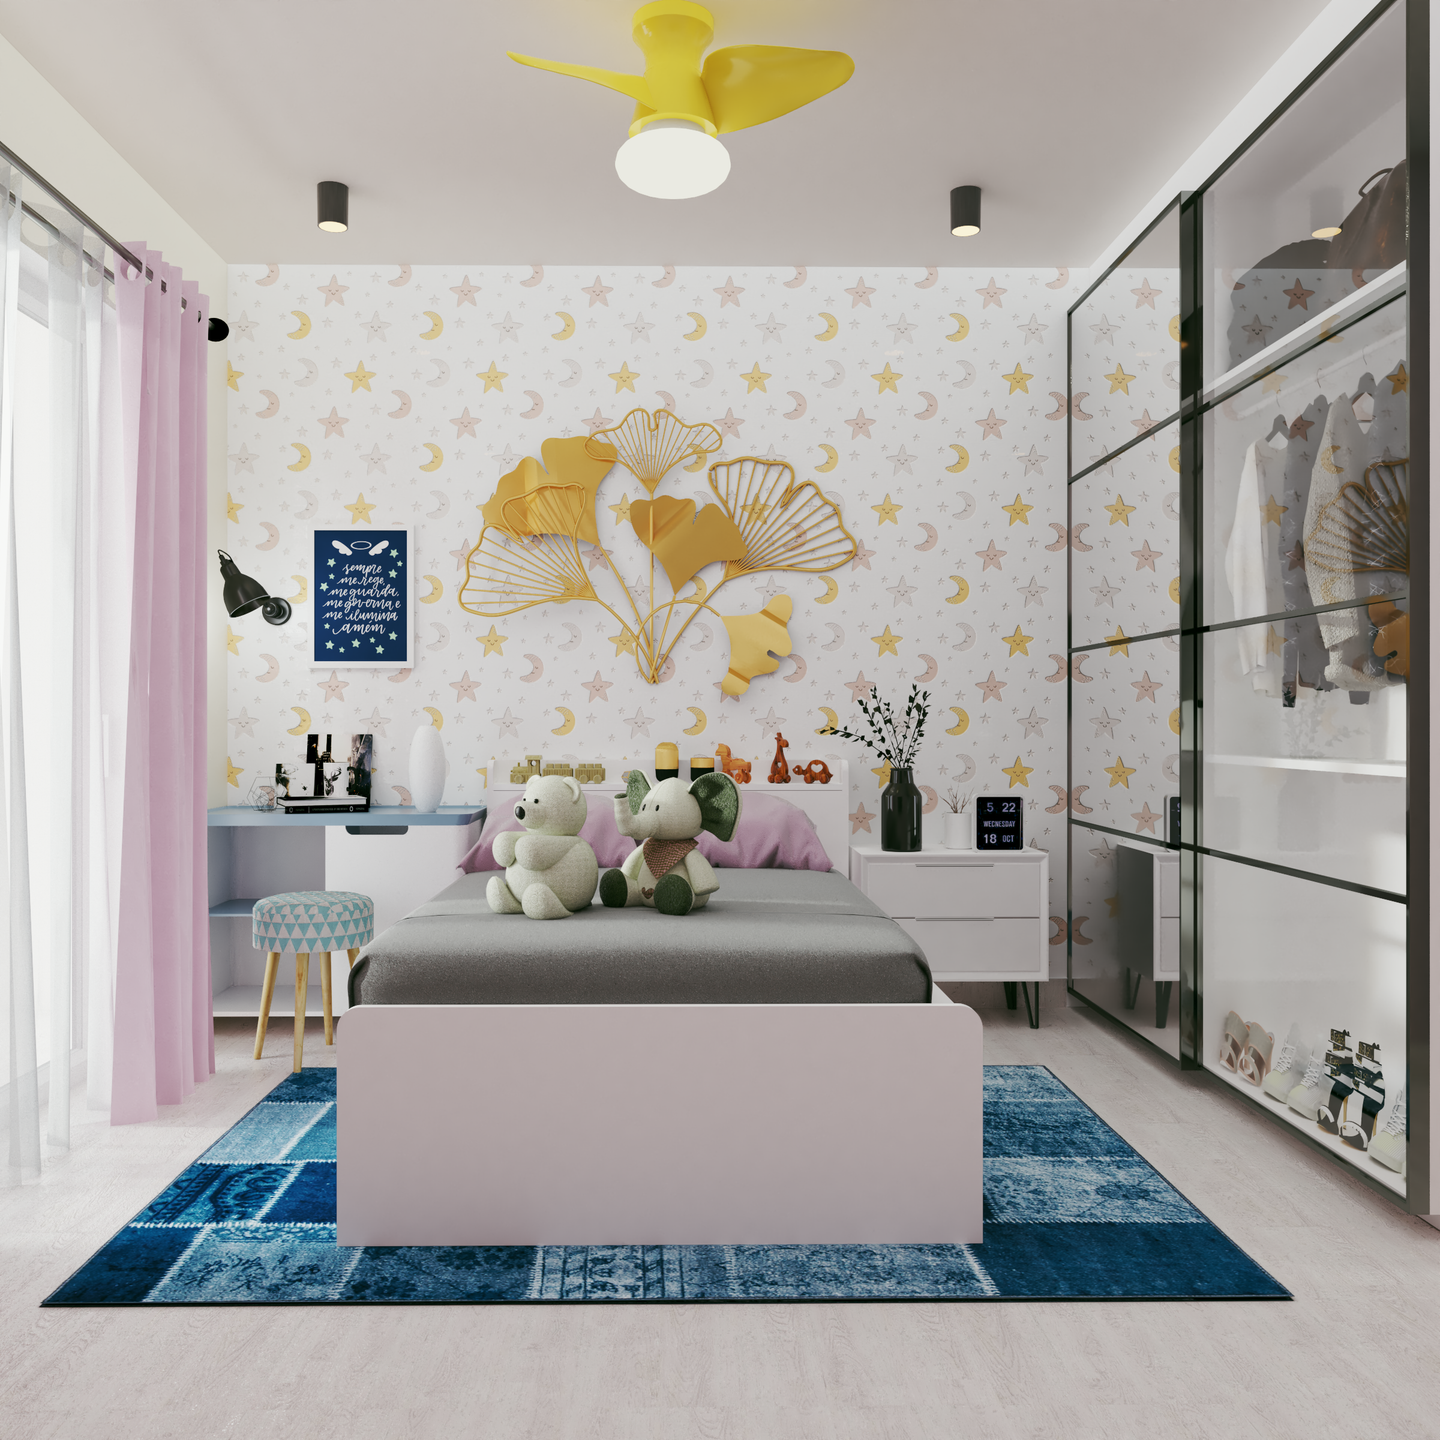 Colourful Kids Bedroom Designed With Modern Elements - Livspace